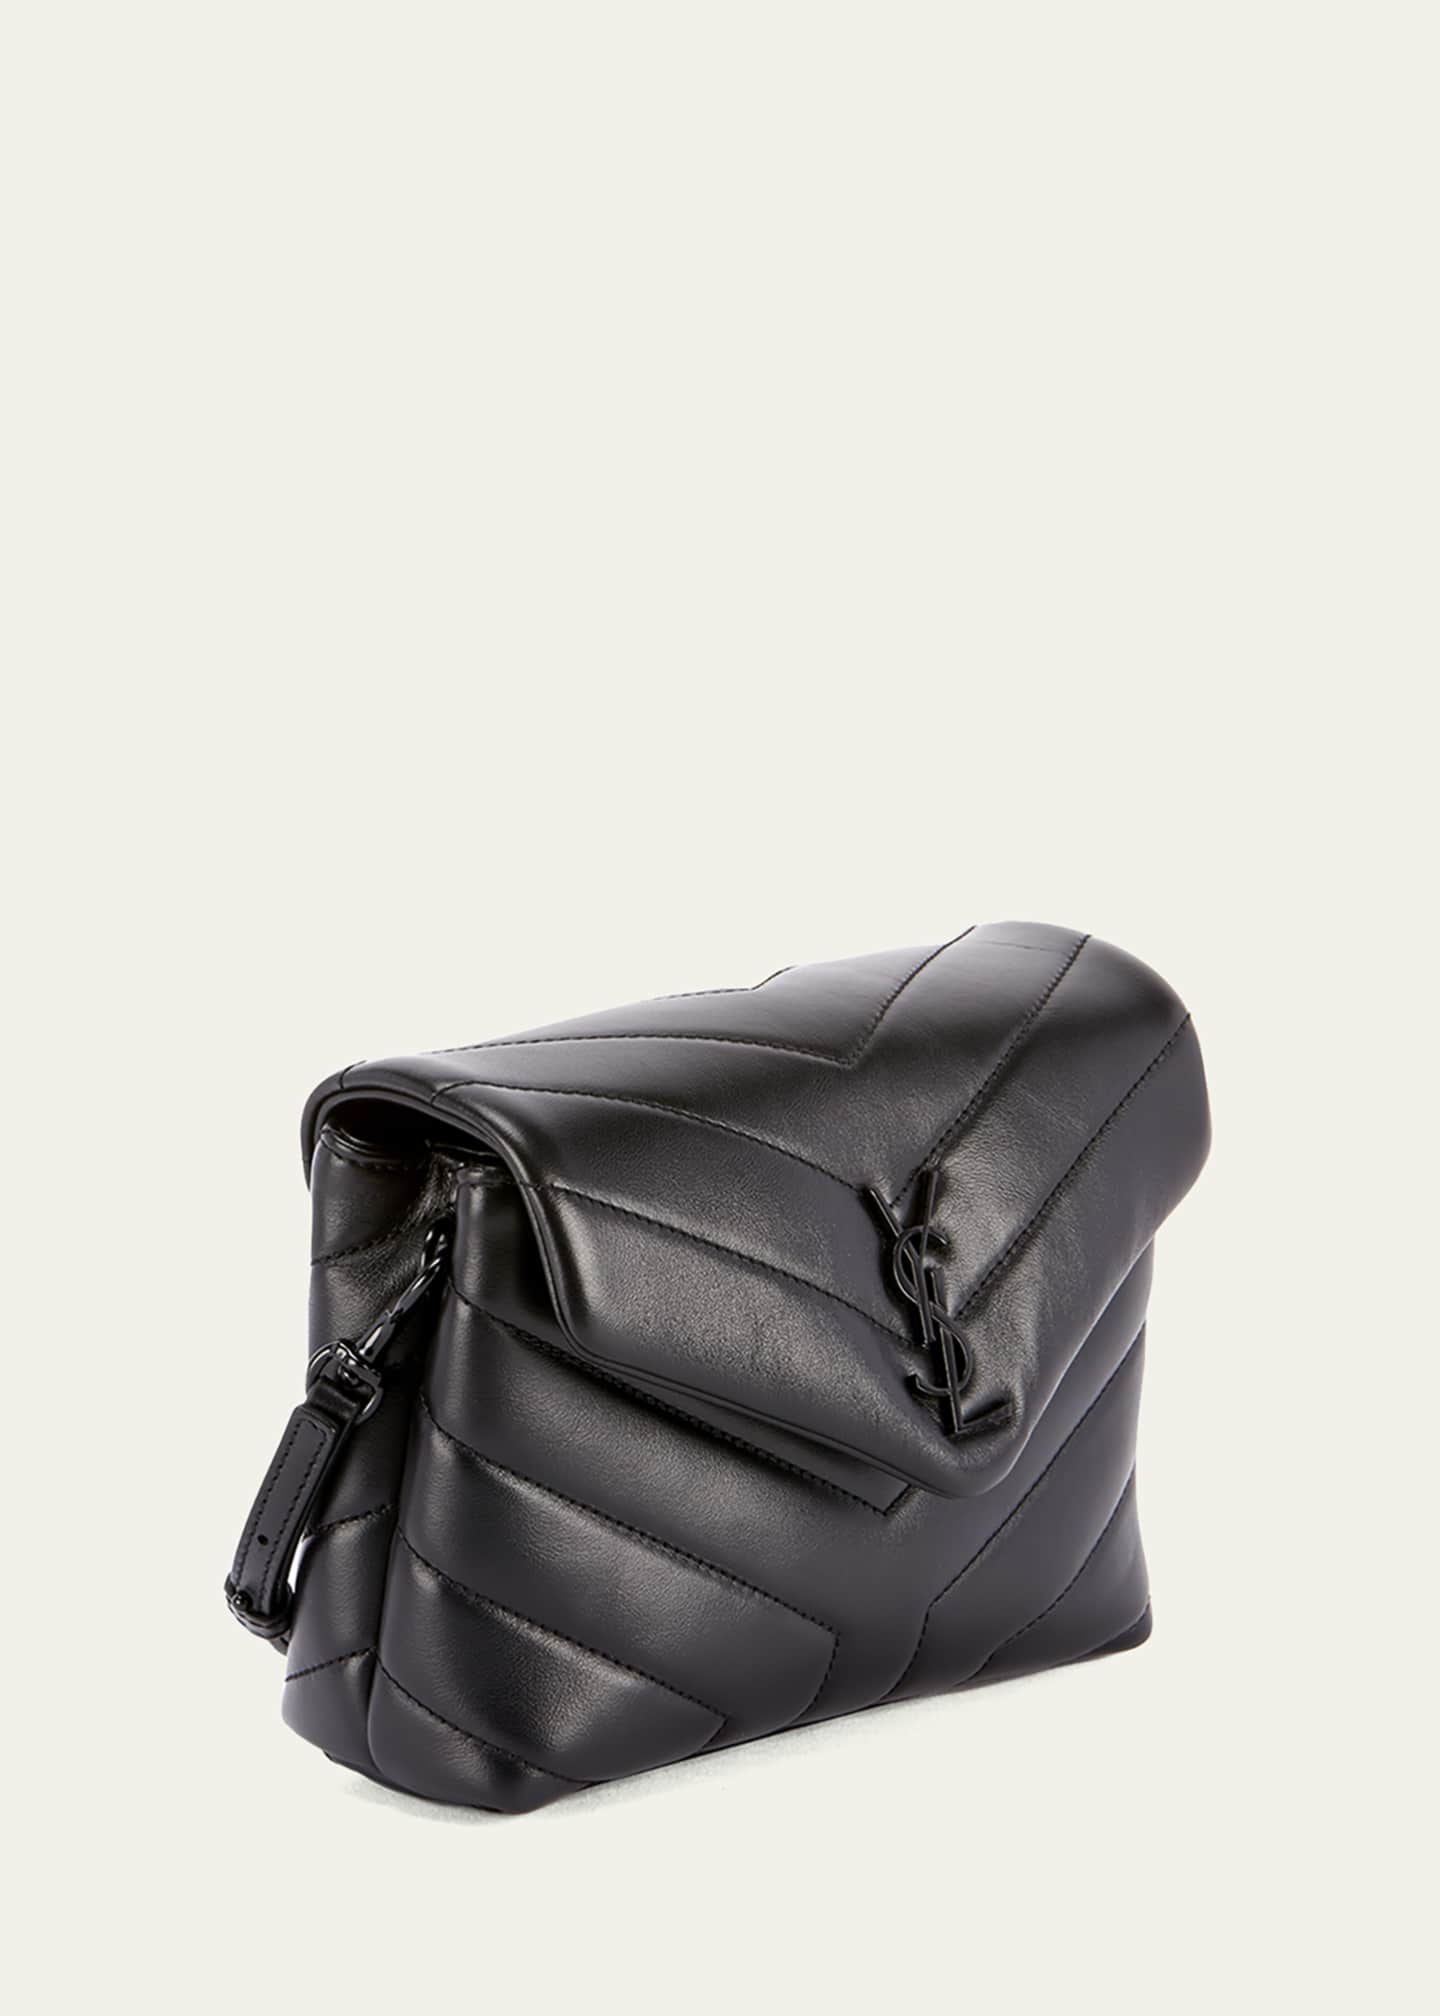 SAINT LAURENT Loulou Toy quilted leather shoulder bag